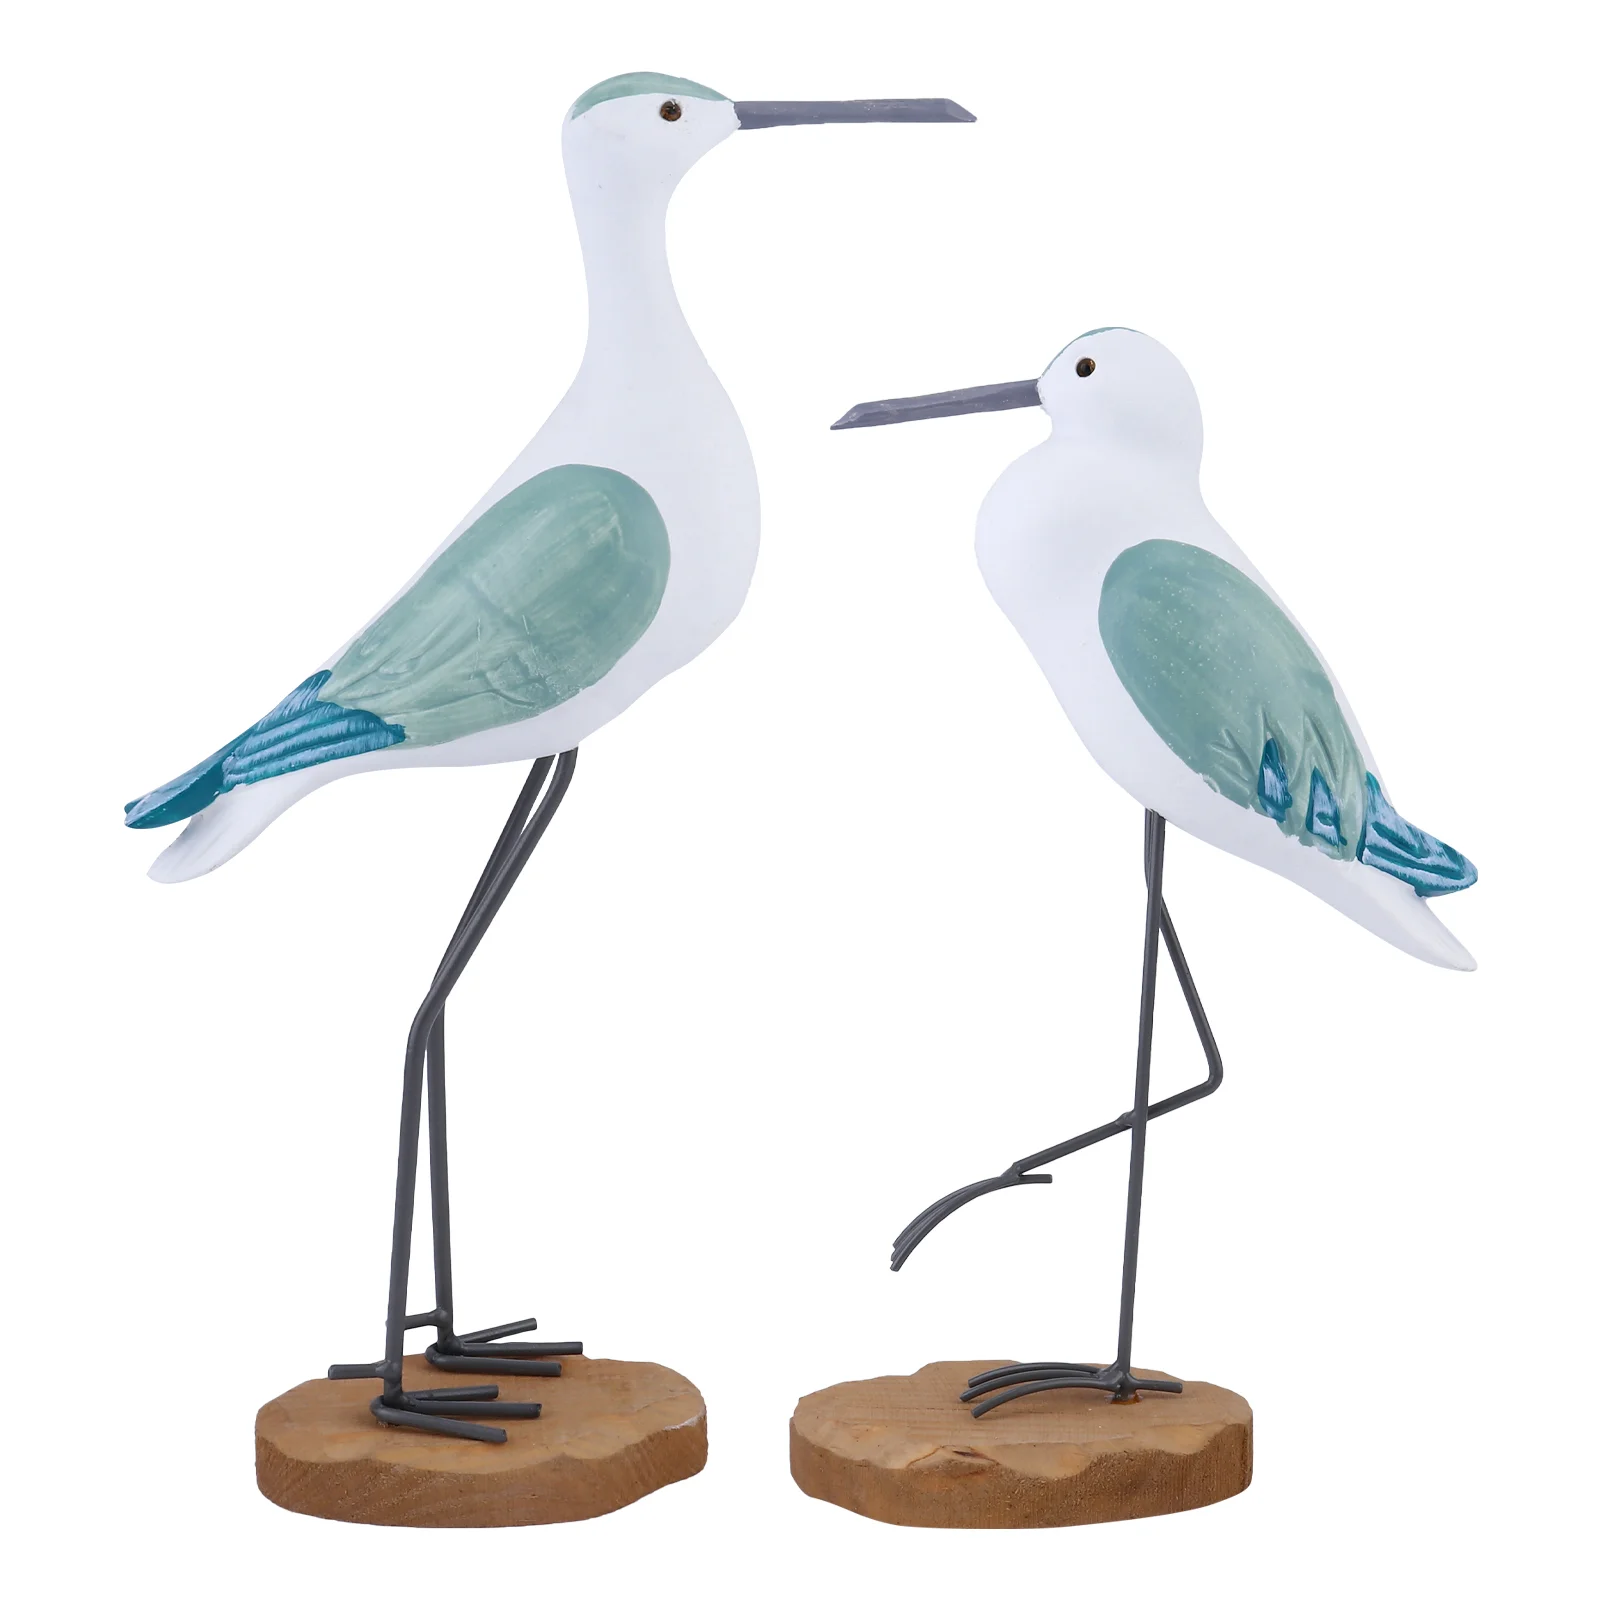 

2pcs Wooden Figurine Nautical Desktop Ornaments Rustic Vintage Bird Sculpture Mediterranean Coastal Beach Home Holiday